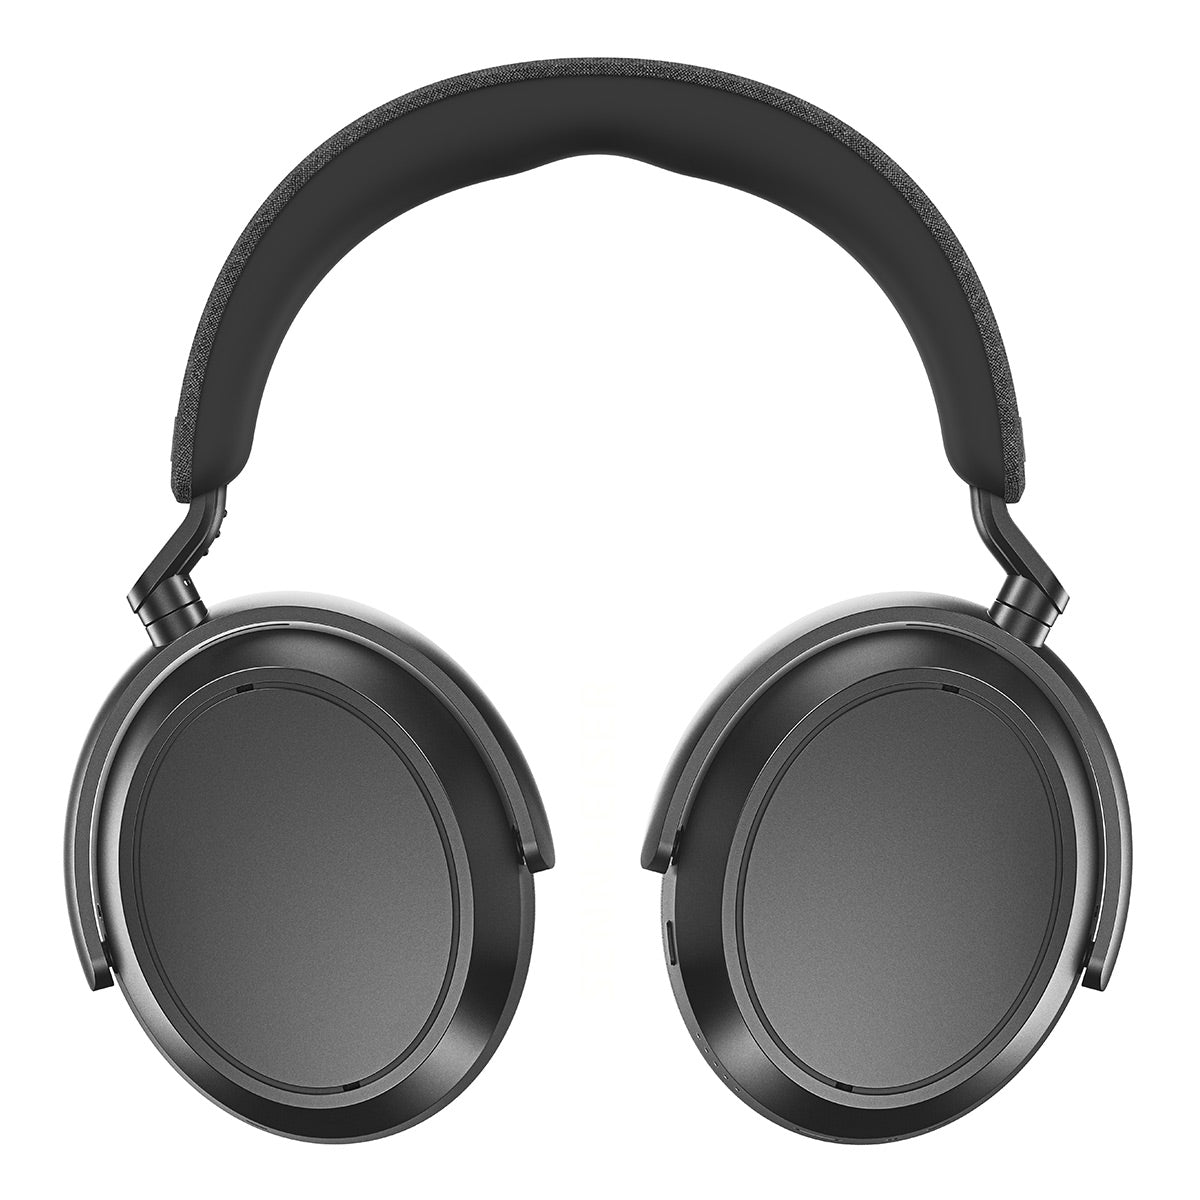 Sennheiser MOMENTUM 4 Wireless Bluetooth Over-Ear Headphones with 